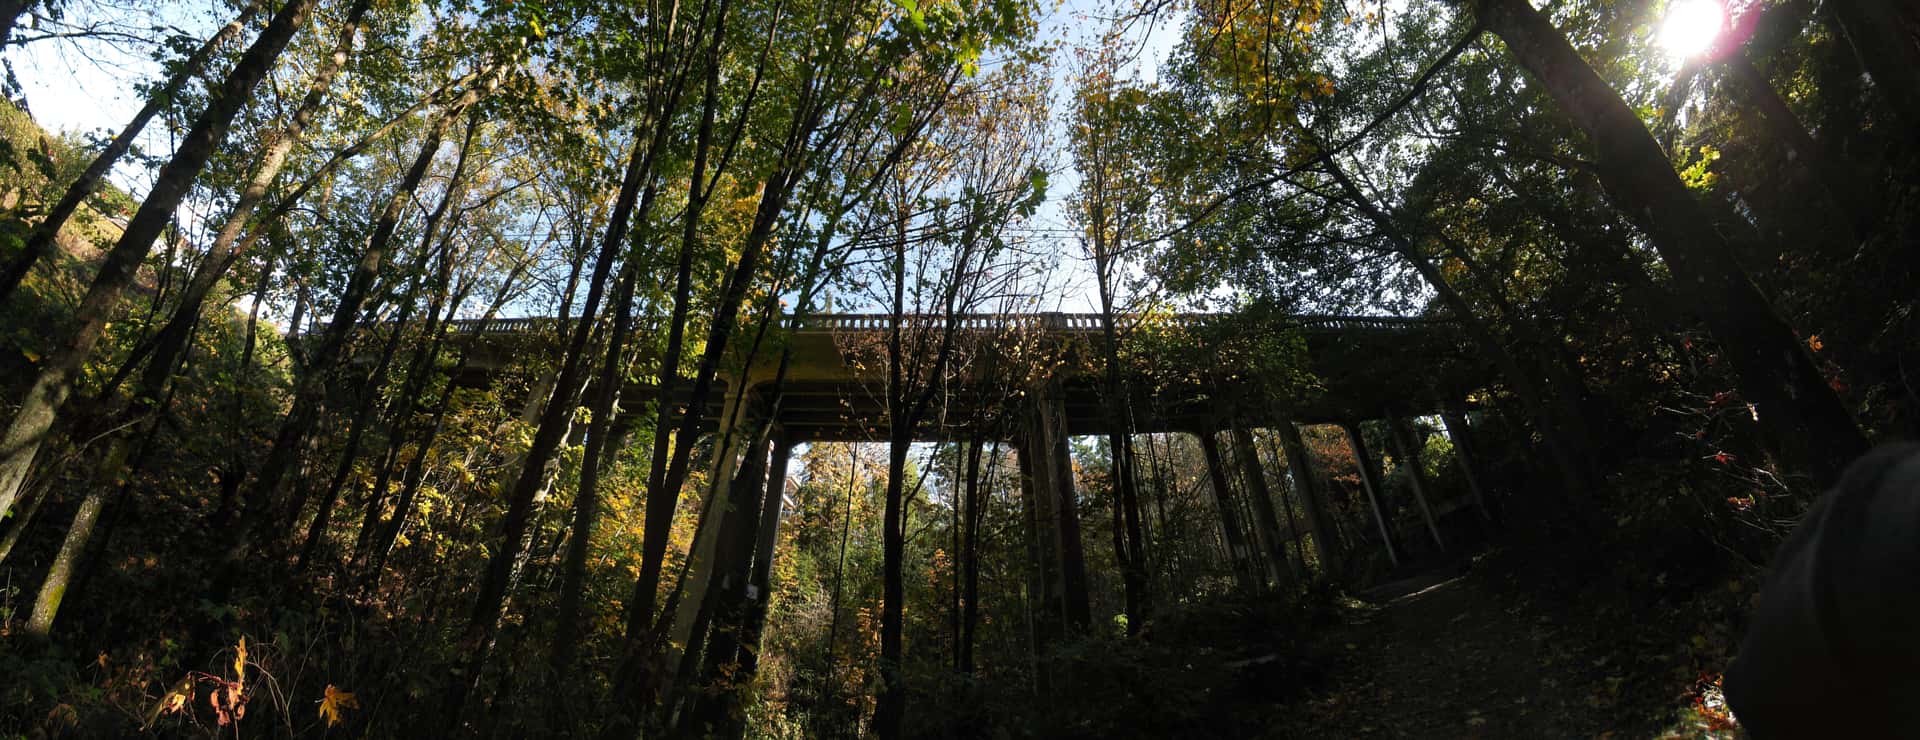 Padden Creek Bridge spanning the ravine, level with sunlit treetops